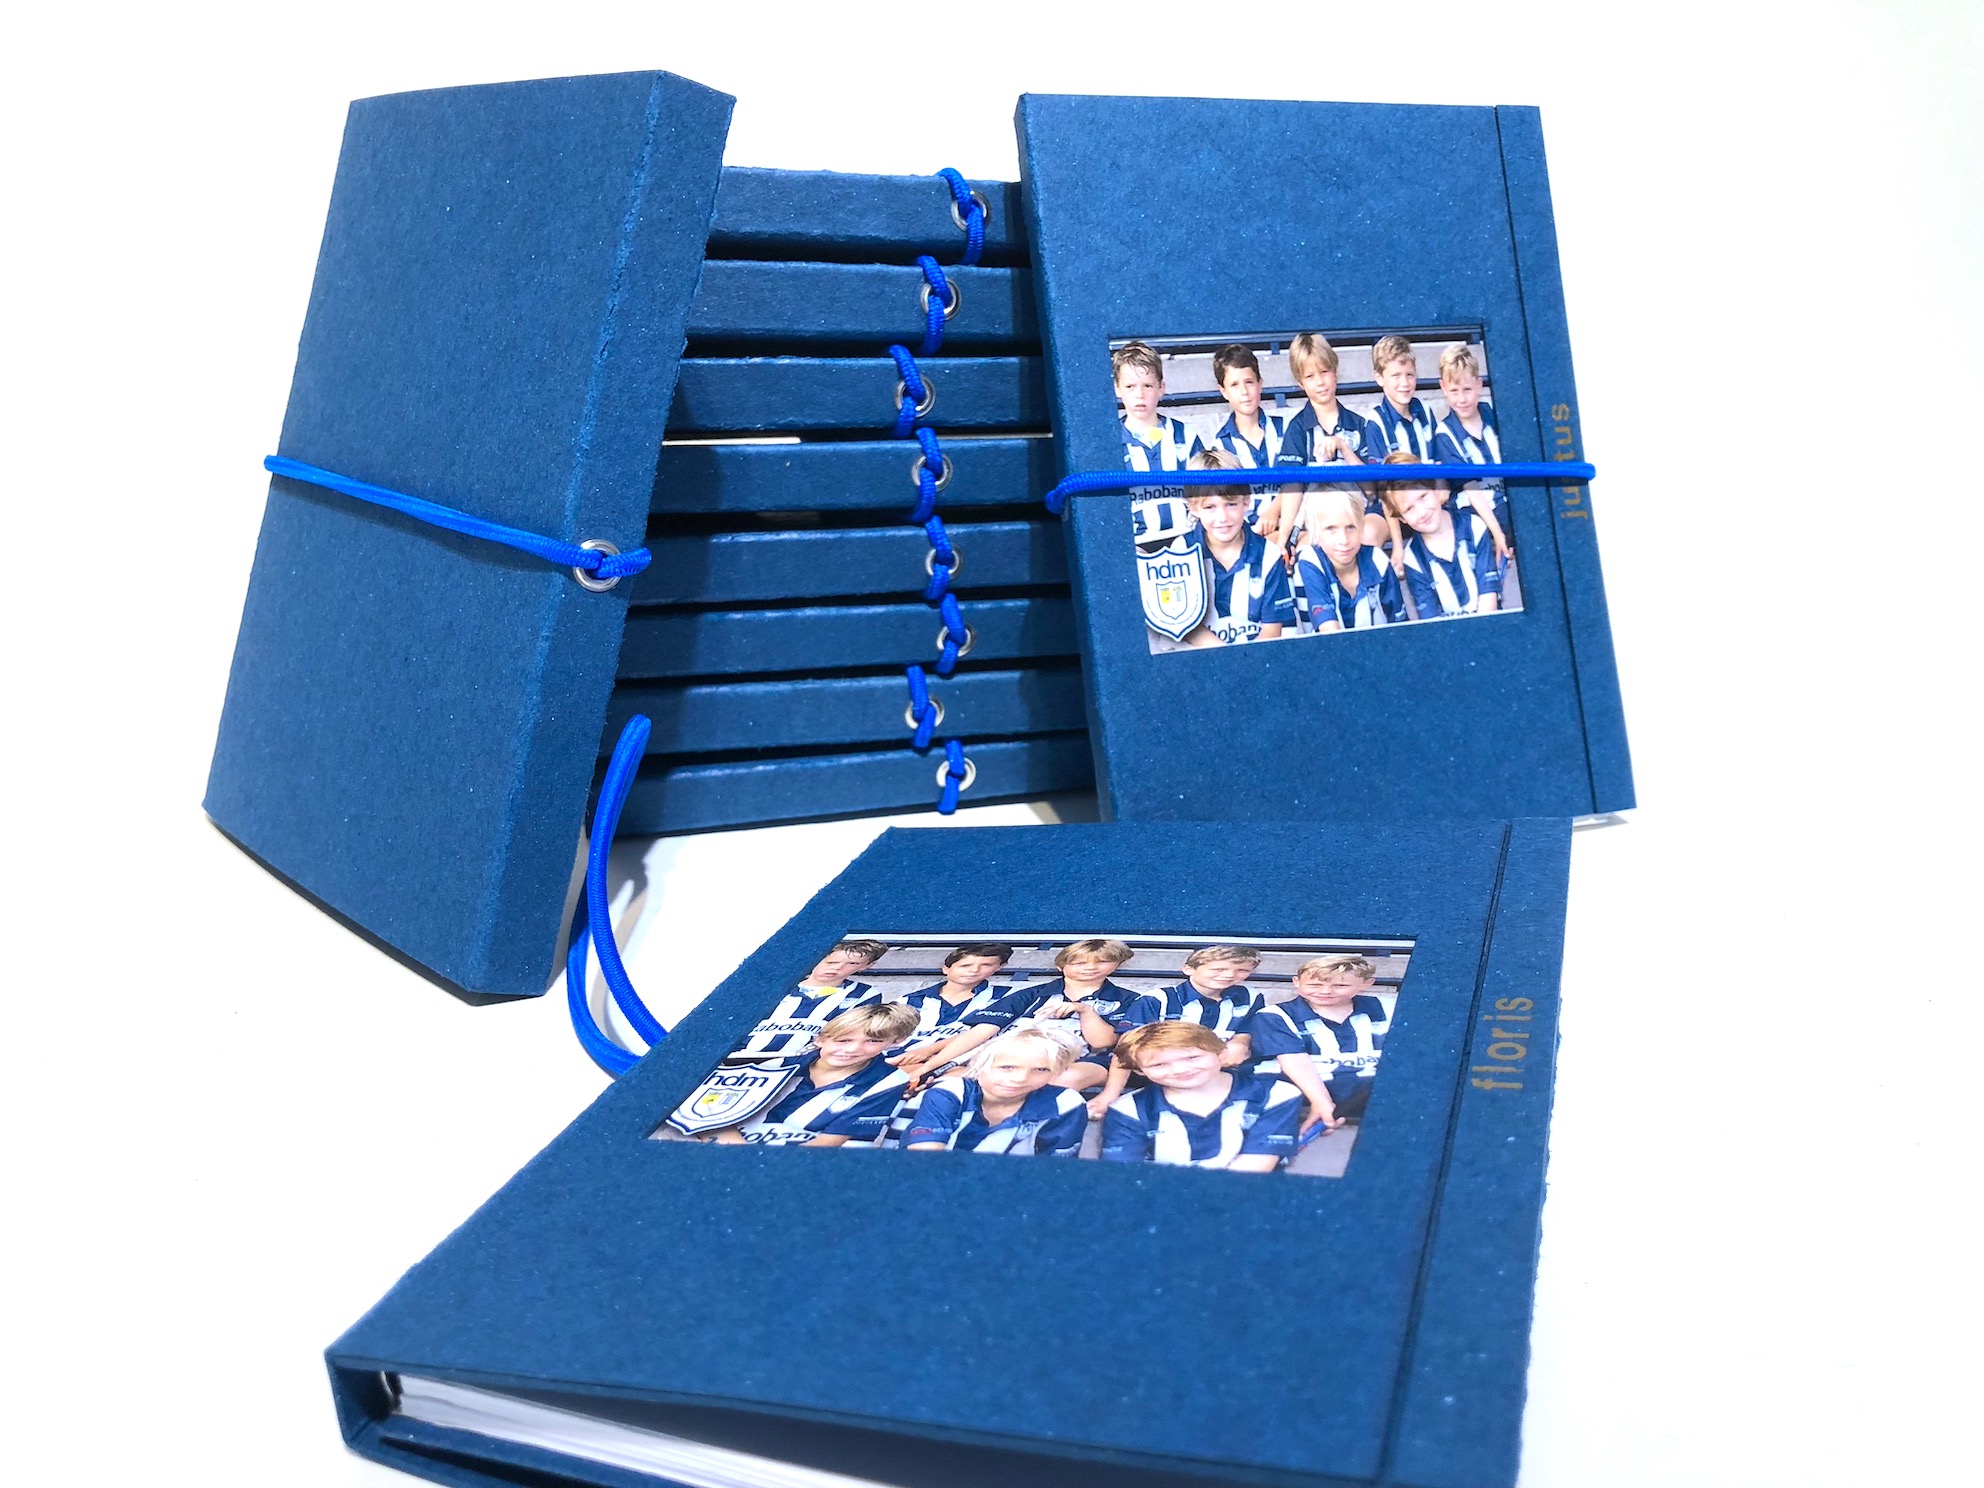 Team boekjes, karton, blauw, ringband, elastiek, boekbinden, hand gemaakt